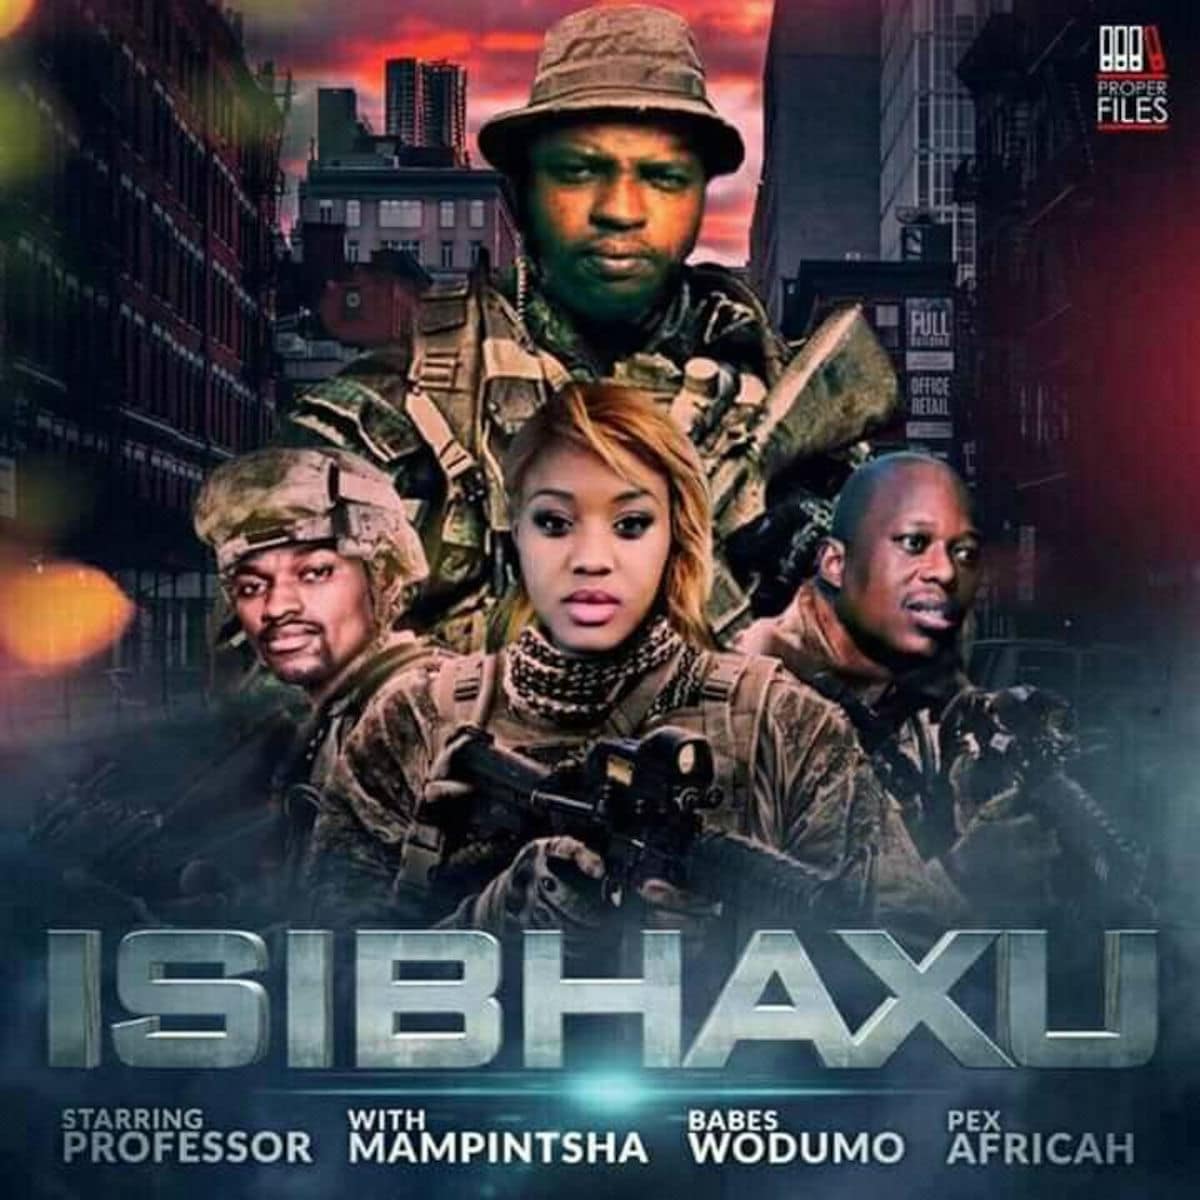 Professor feat. Babes Wodumo, Mampintsha & Pex Africah - Isibhaxu